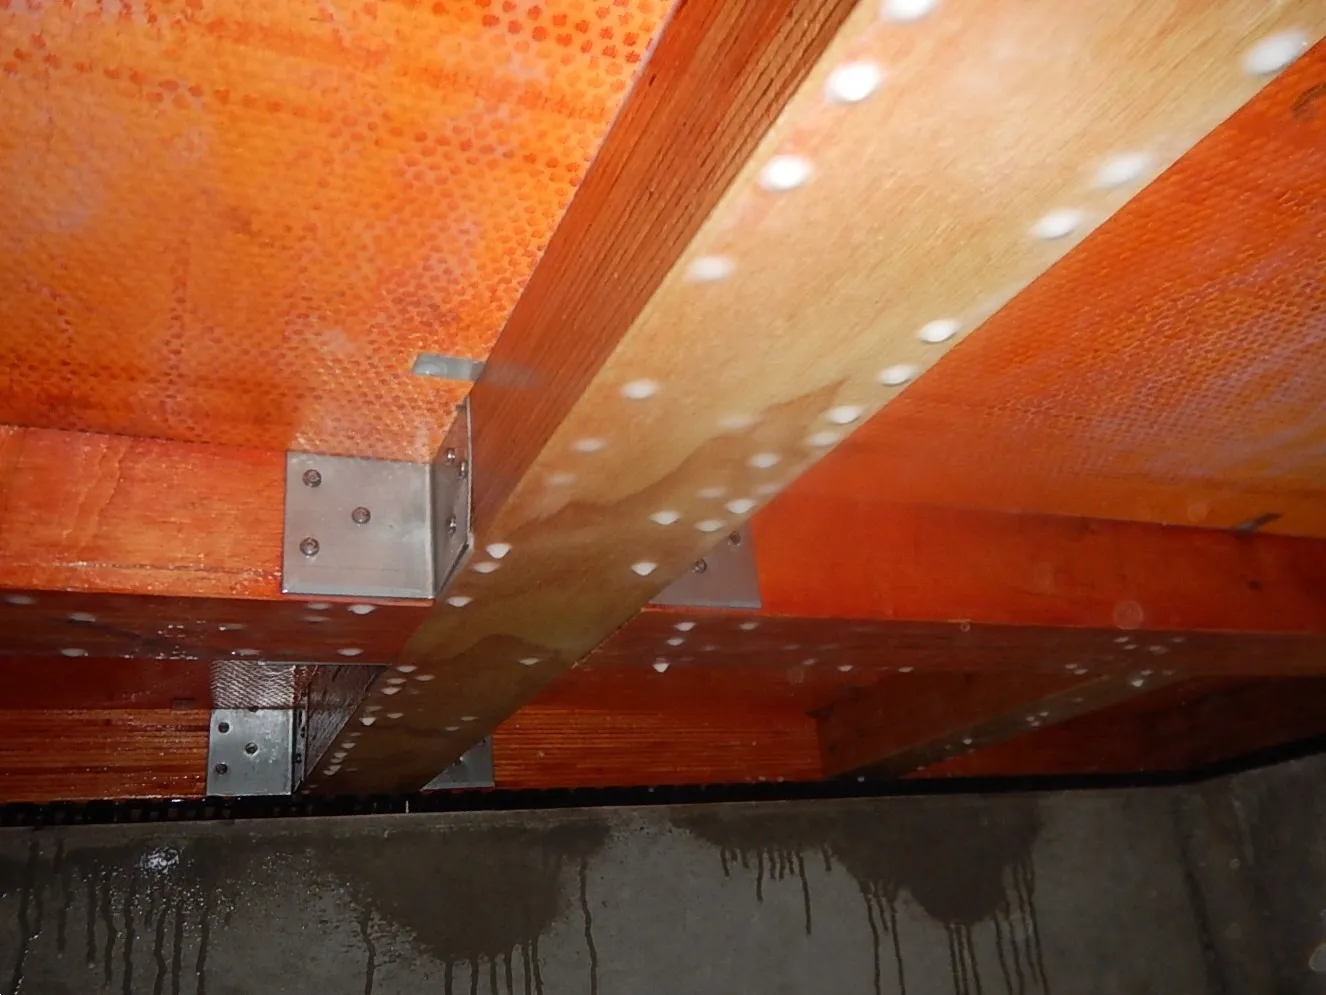 住宅床下漏水事故後の防カビ工事と除菌消臭工事対応